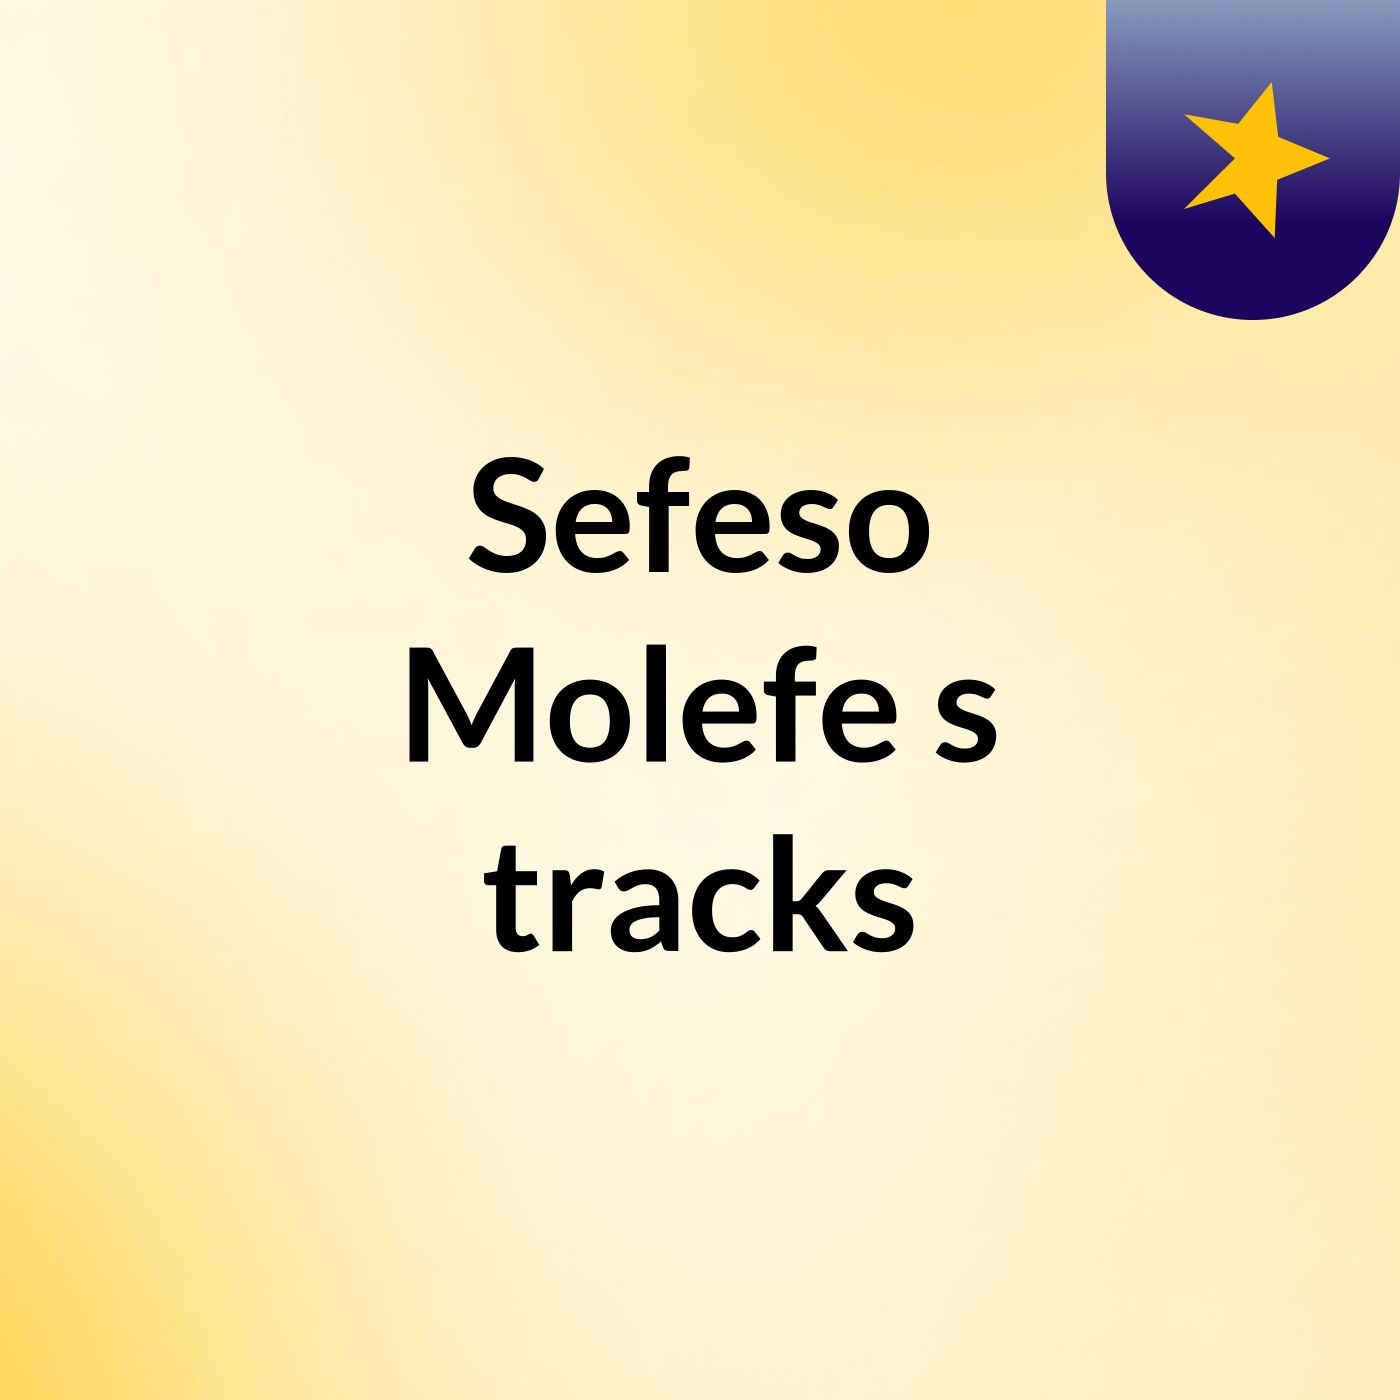 Episode 16 - Sefeso Molefe's tracks